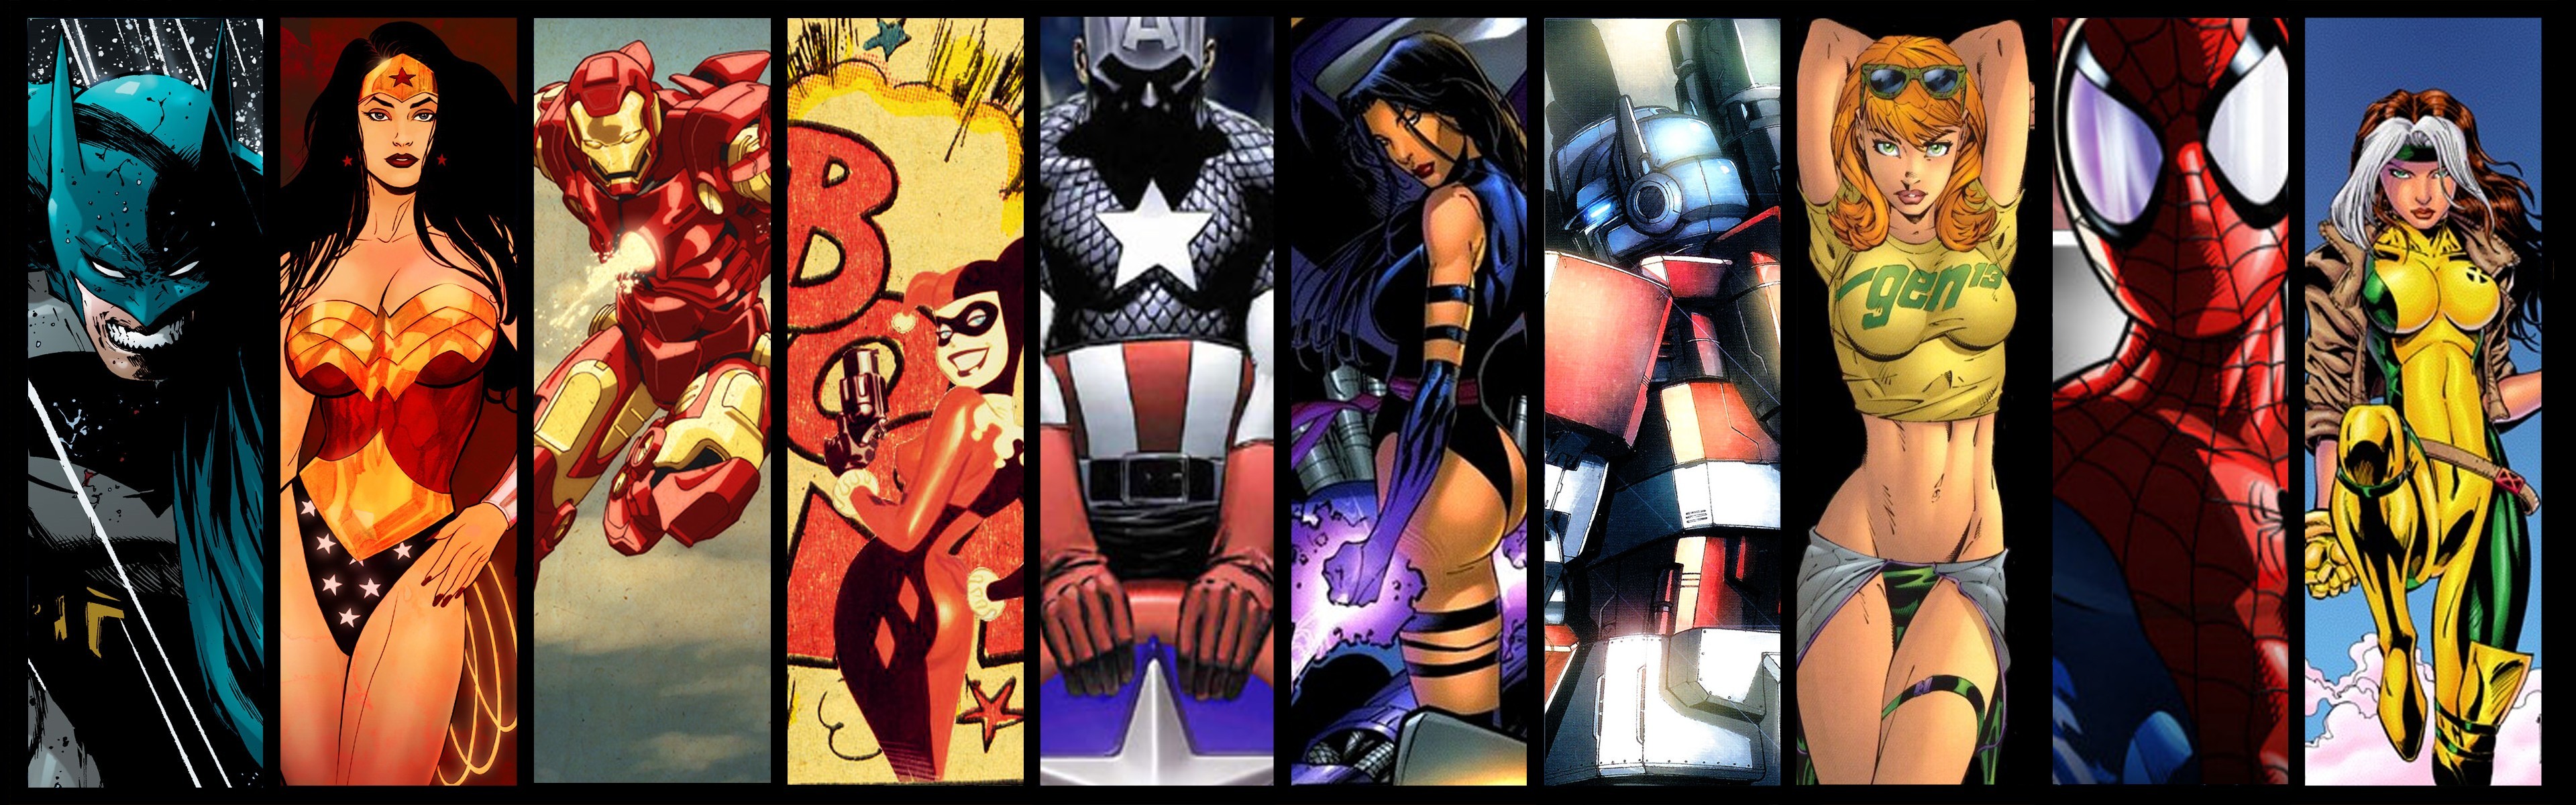 3840x1200 General  Marvel Comics The Avengers DC Comics Transformers Batman  Harley Quinn Iron Man Wonder Woman